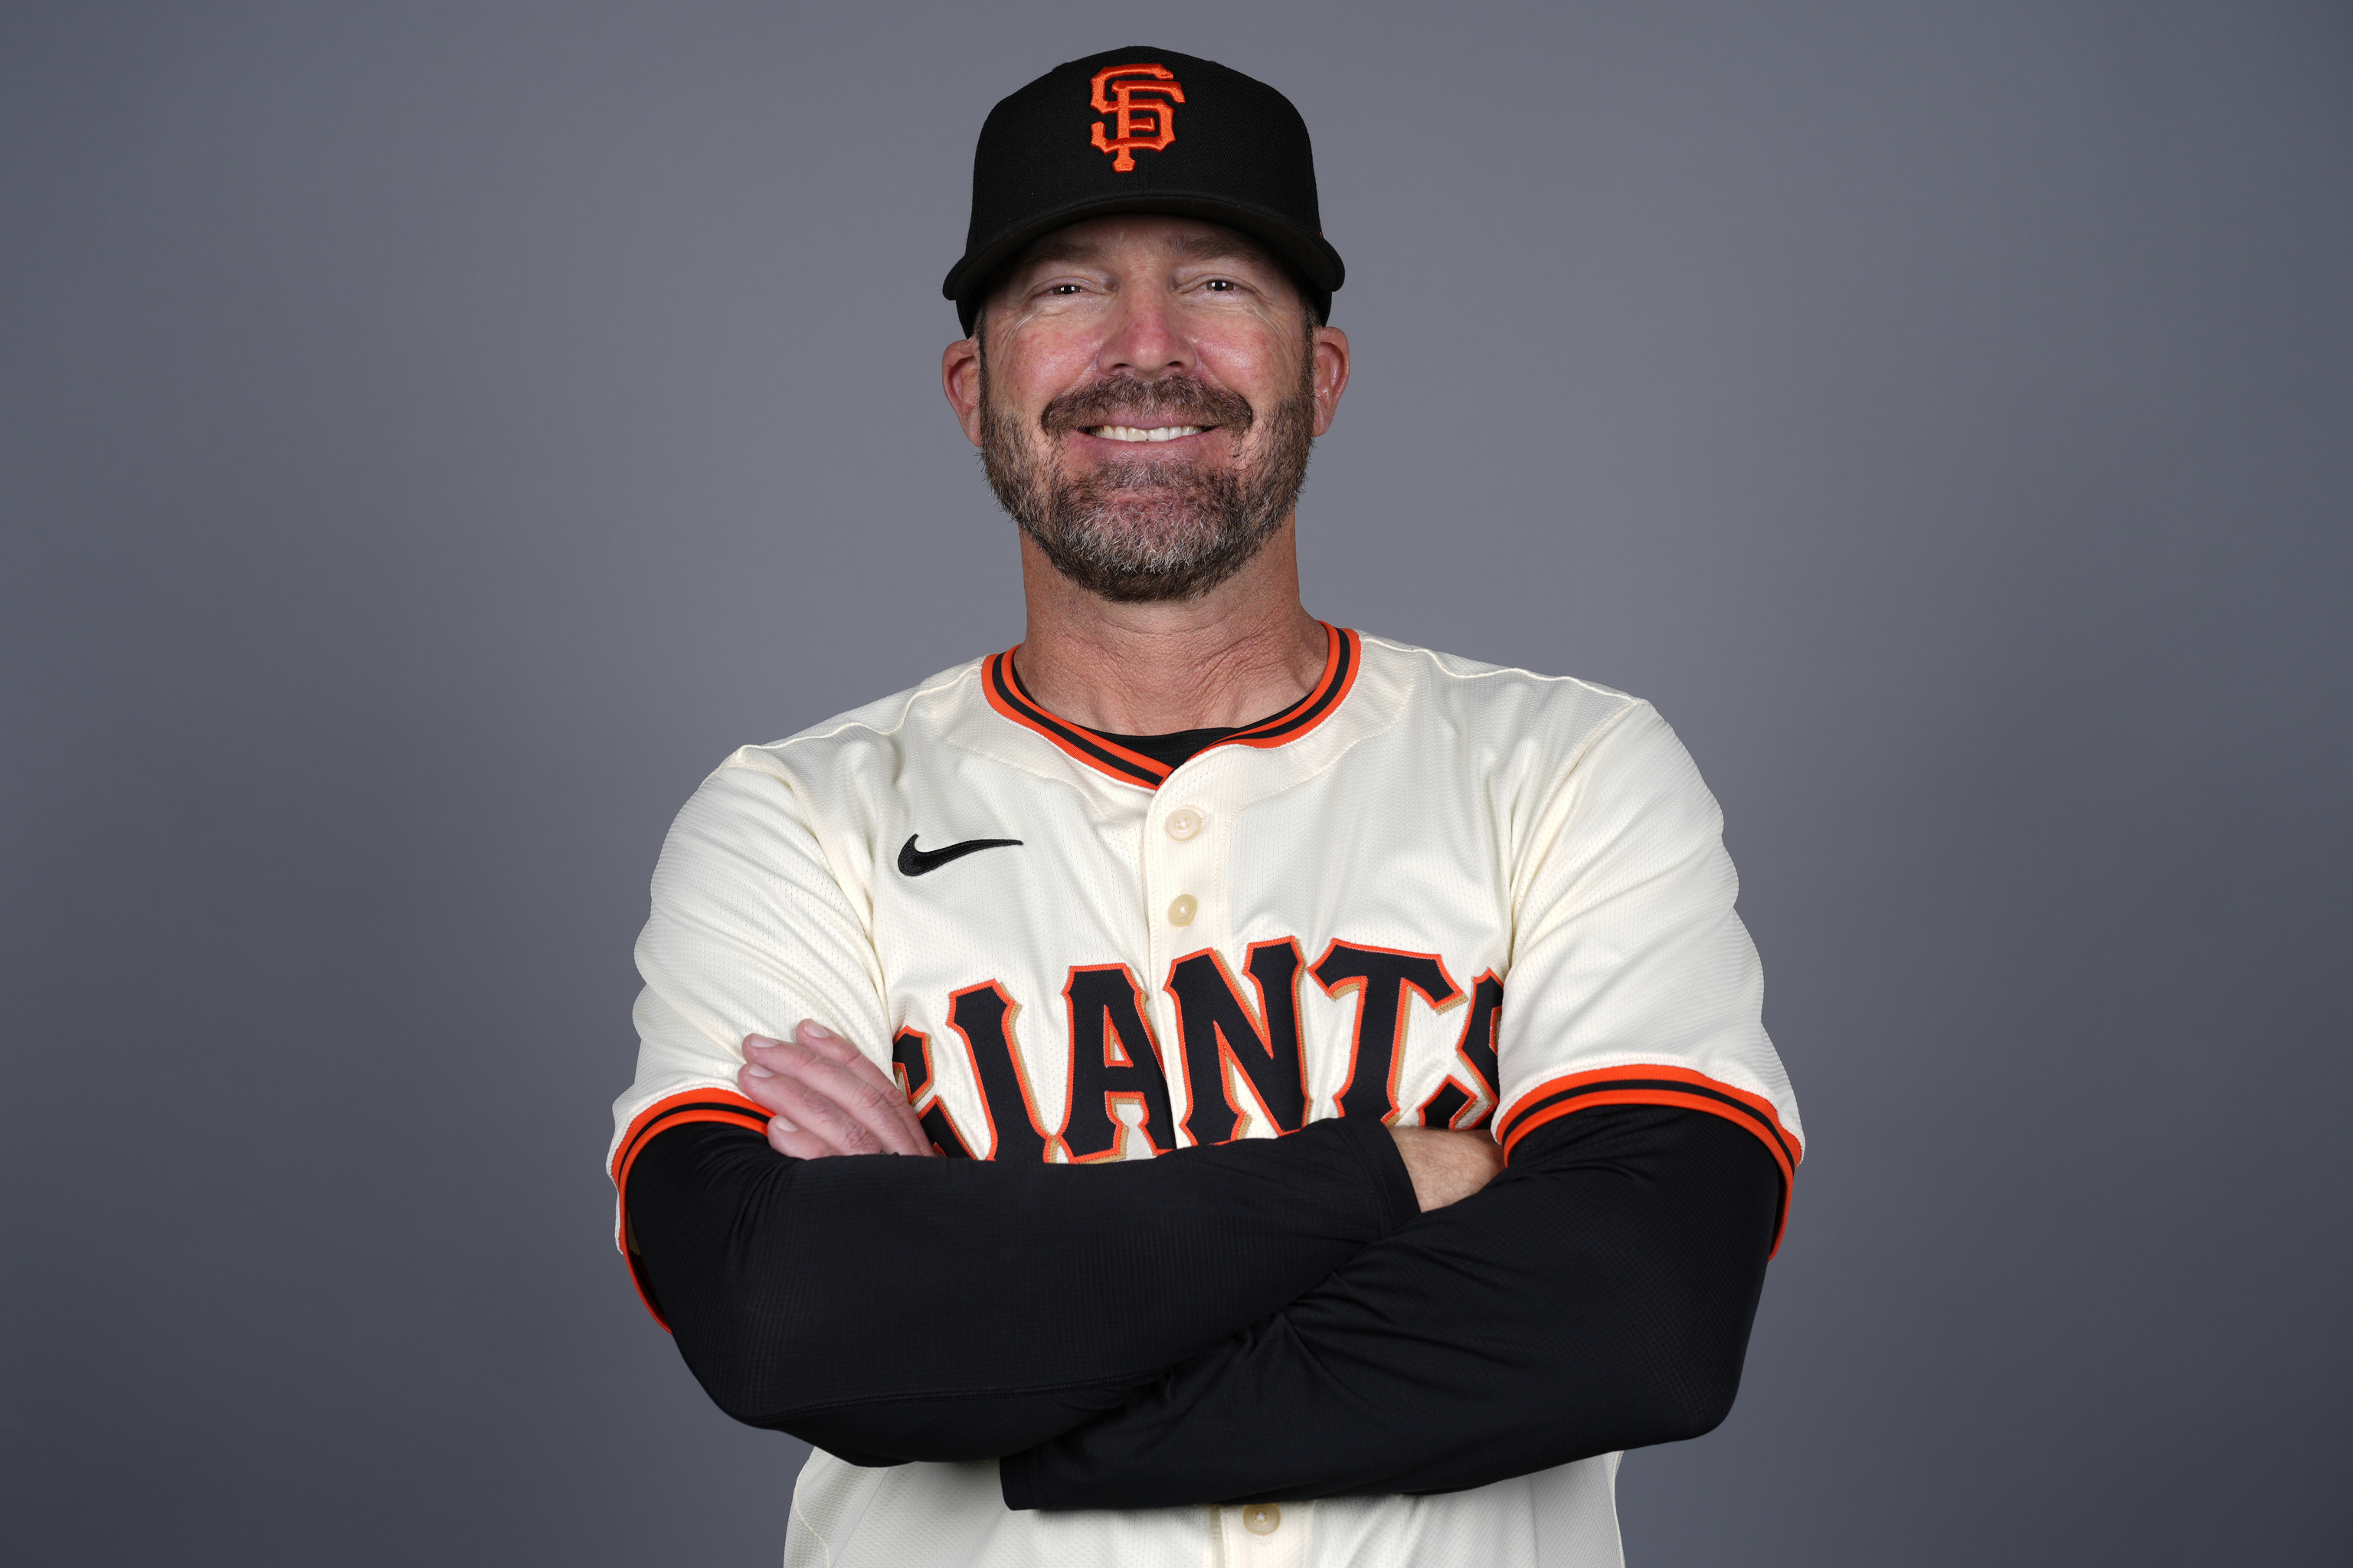 Ryan Christenson of the San Francisco Giants baseball team poses